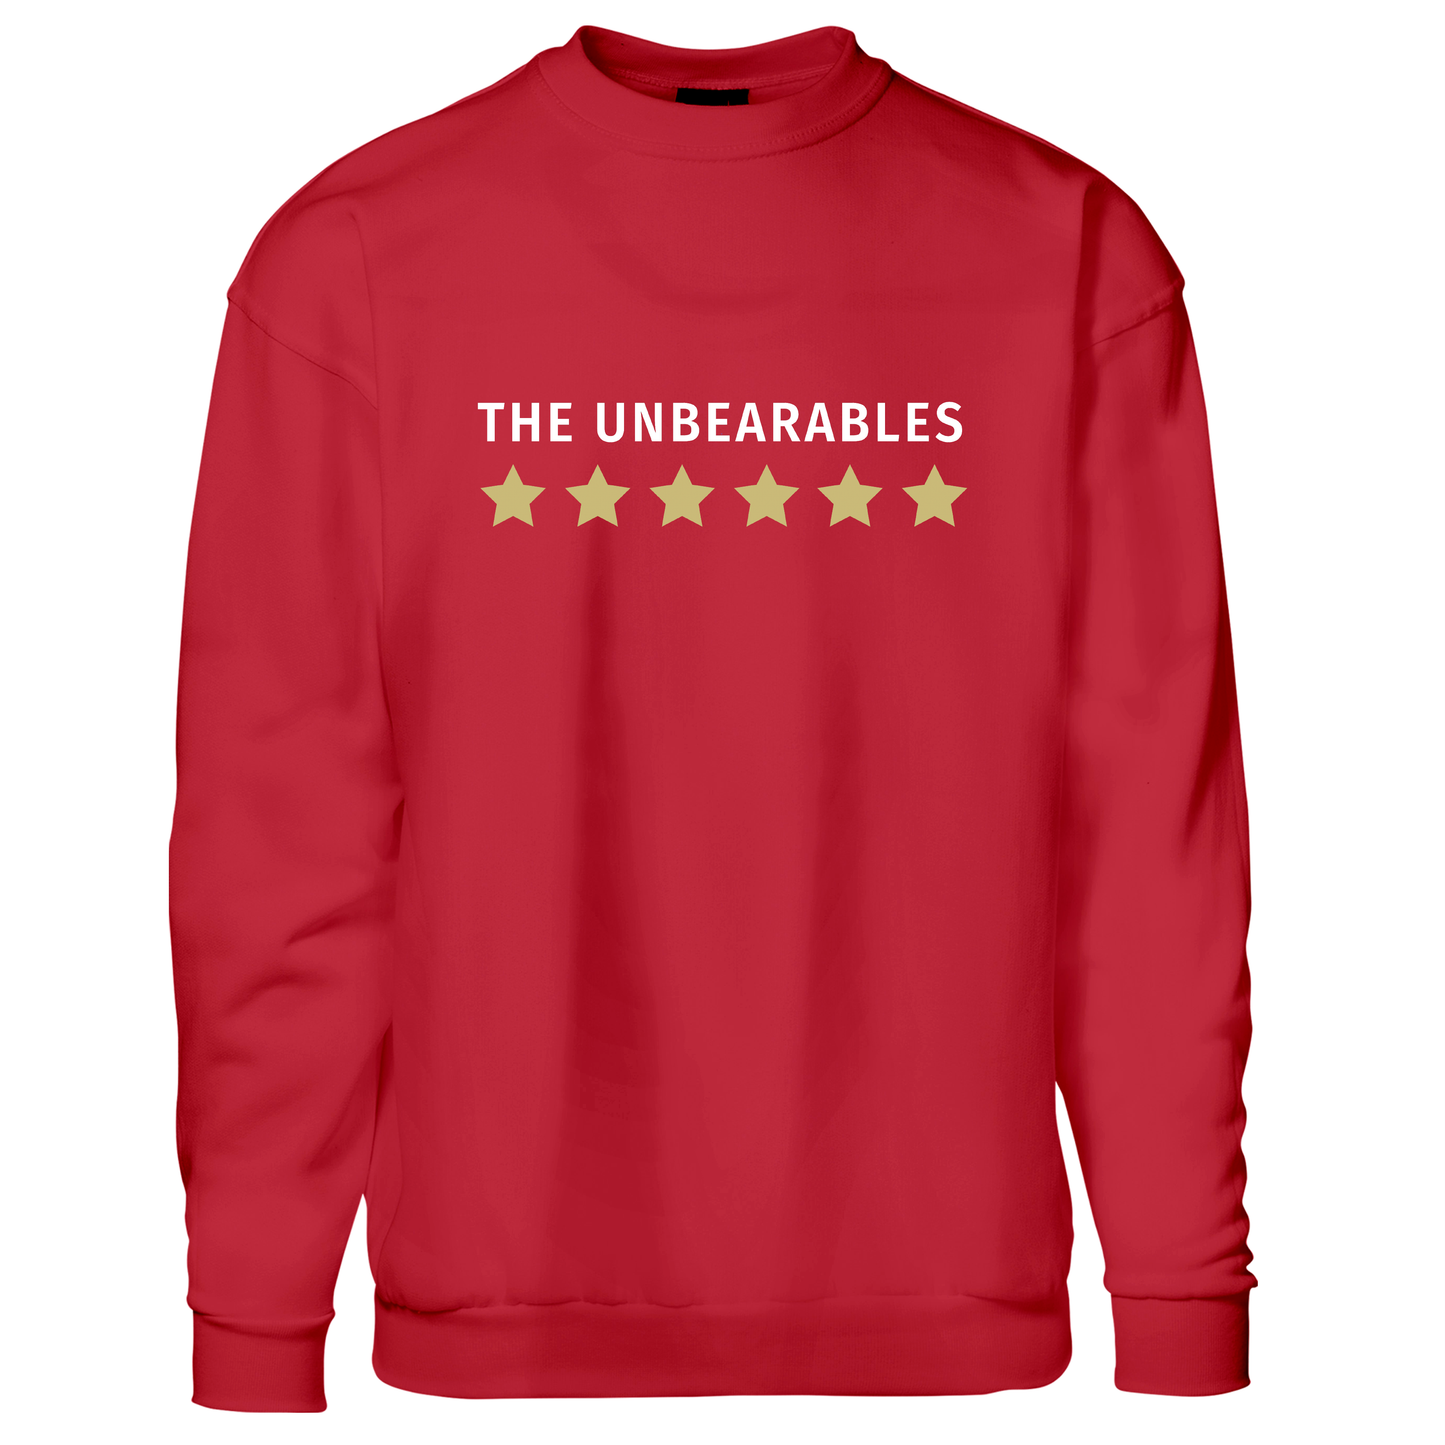 The Unbearables - Sweatshirt